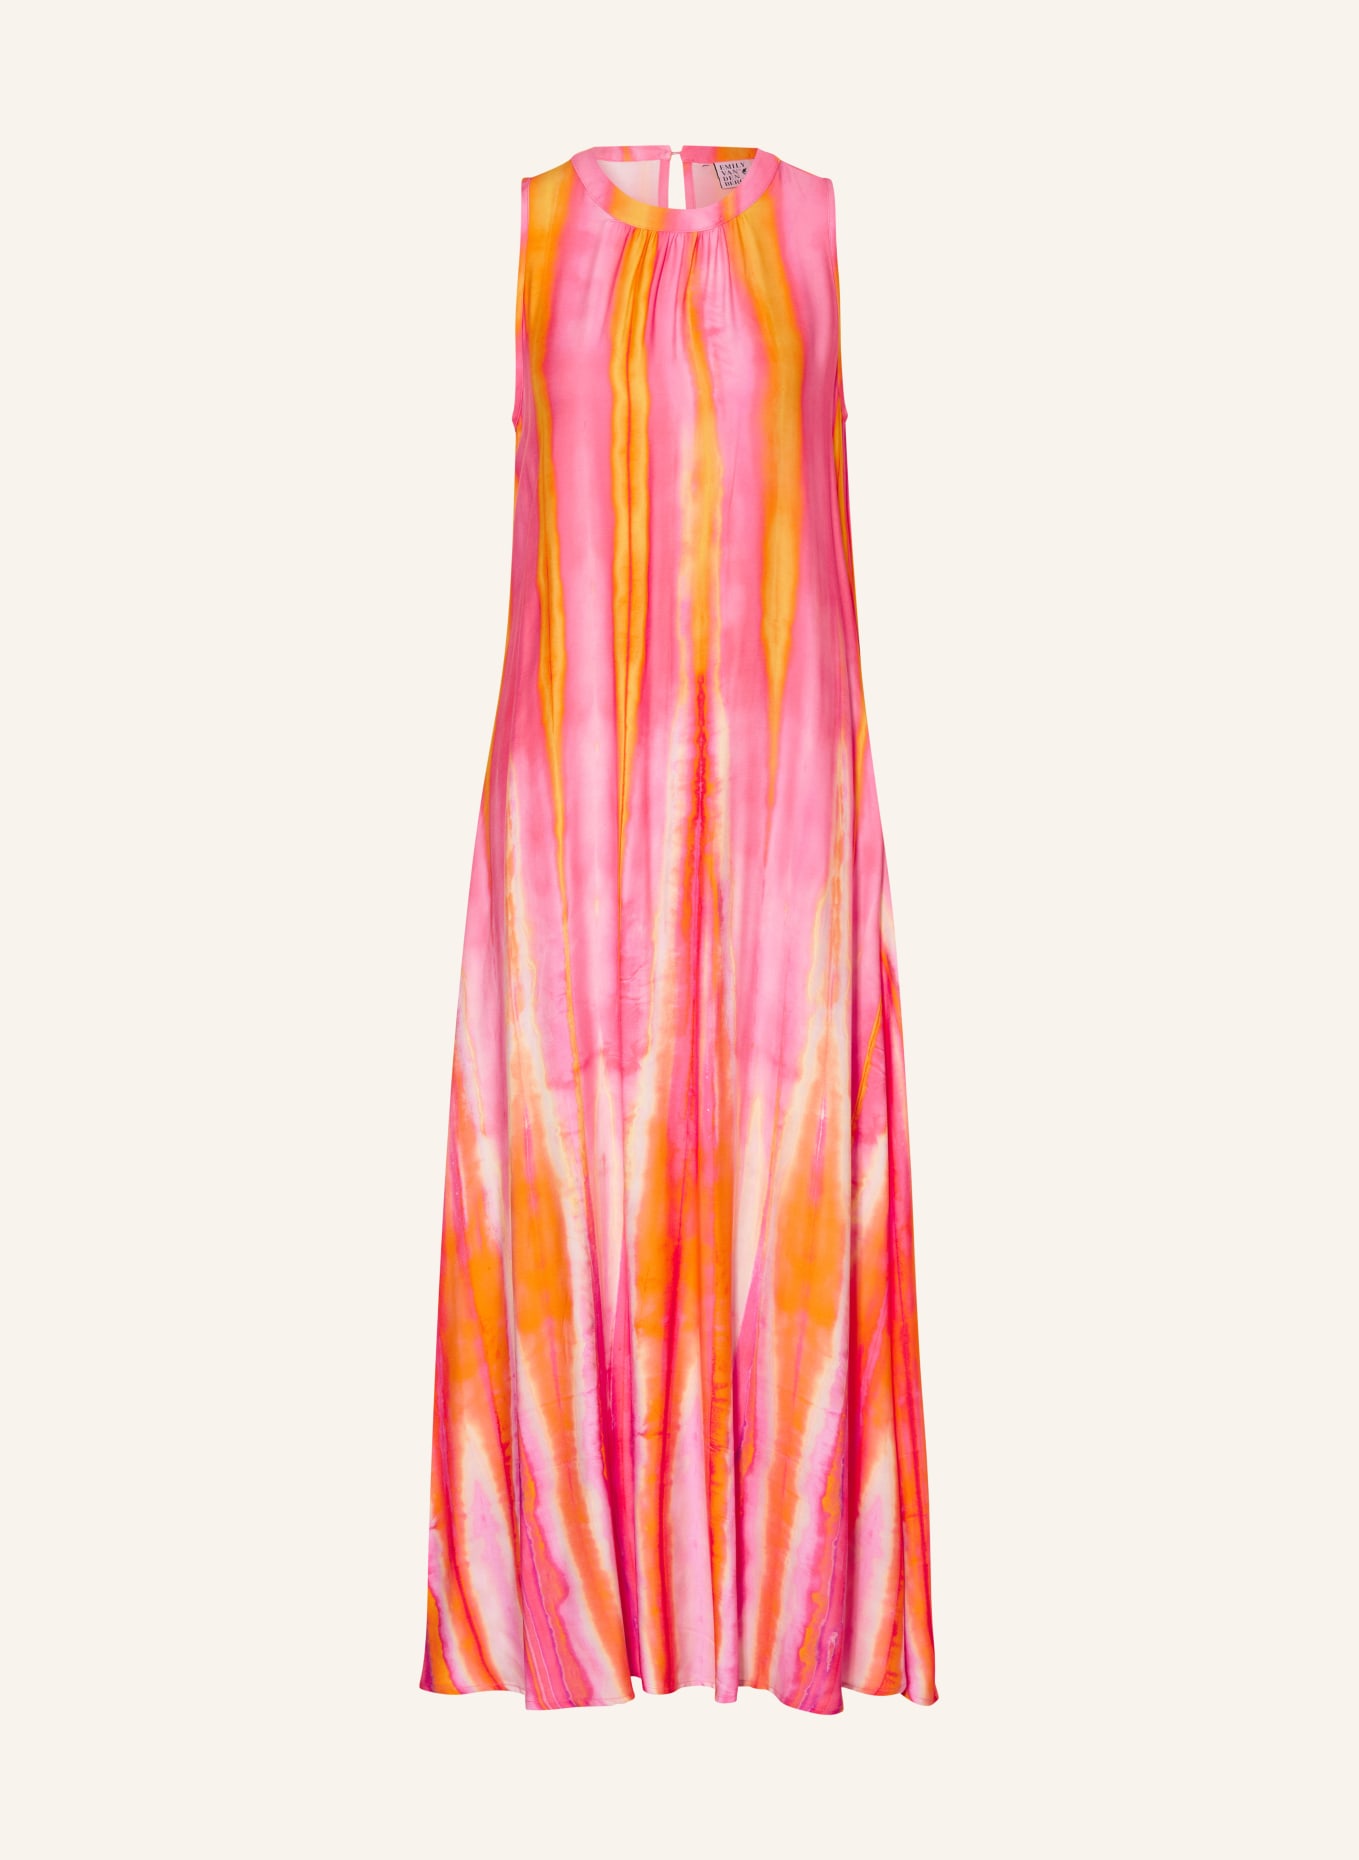 Emily VAN DEN BERGH Kleid, Farbe: PINK/ ORANGE (Bild 1)